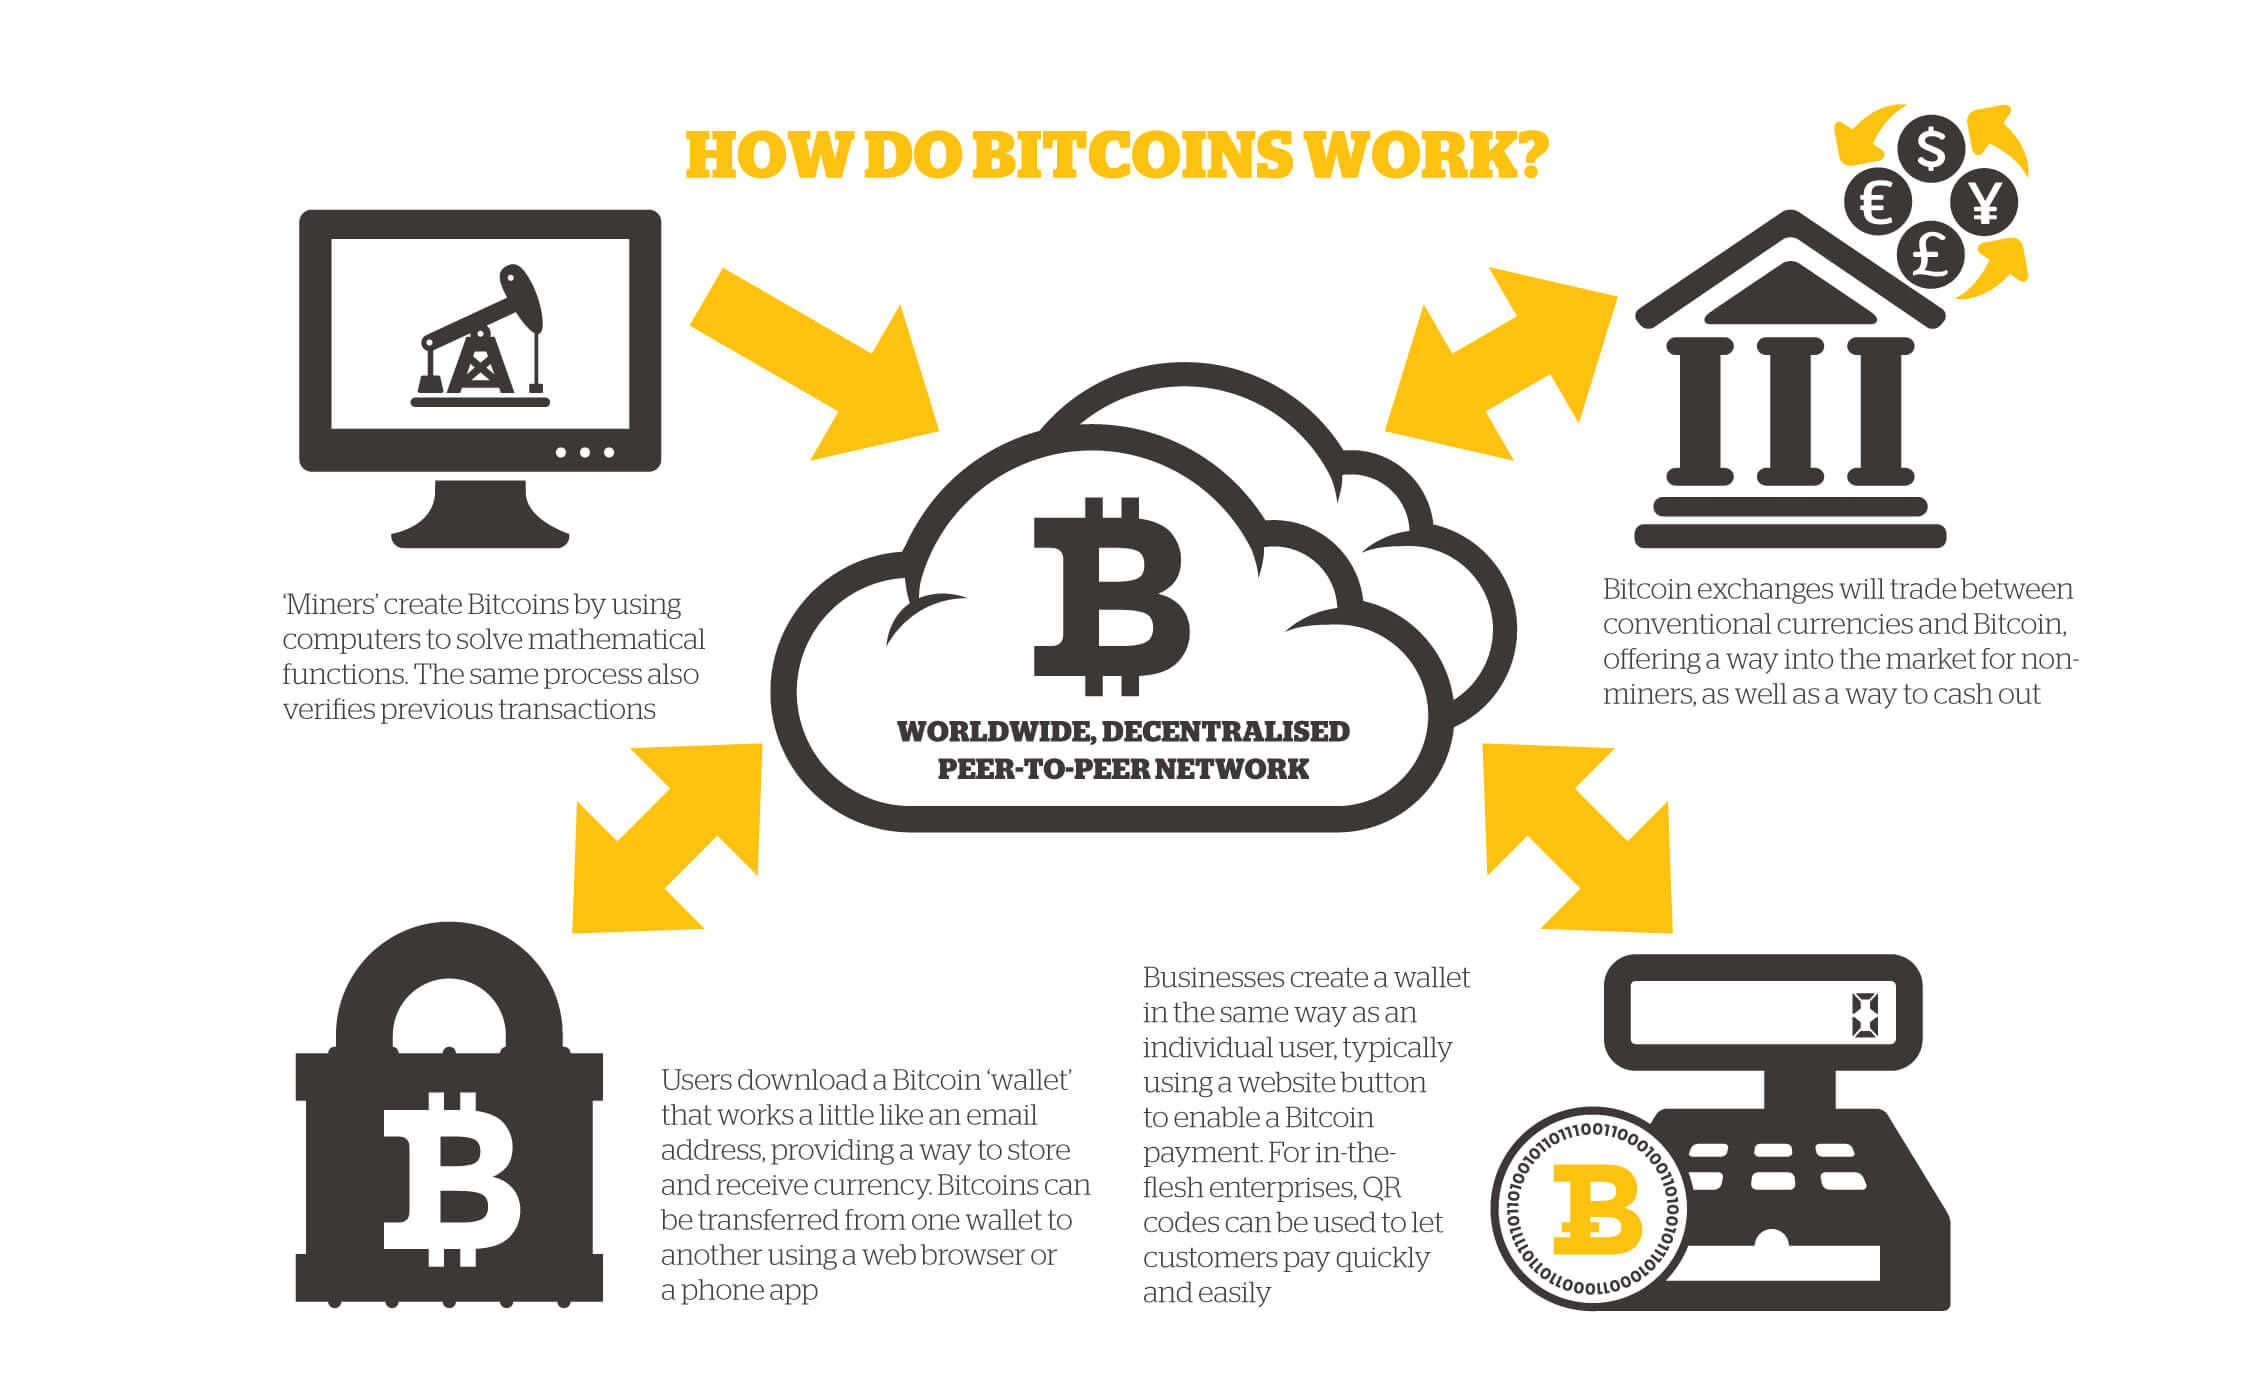 How Bitcoin works